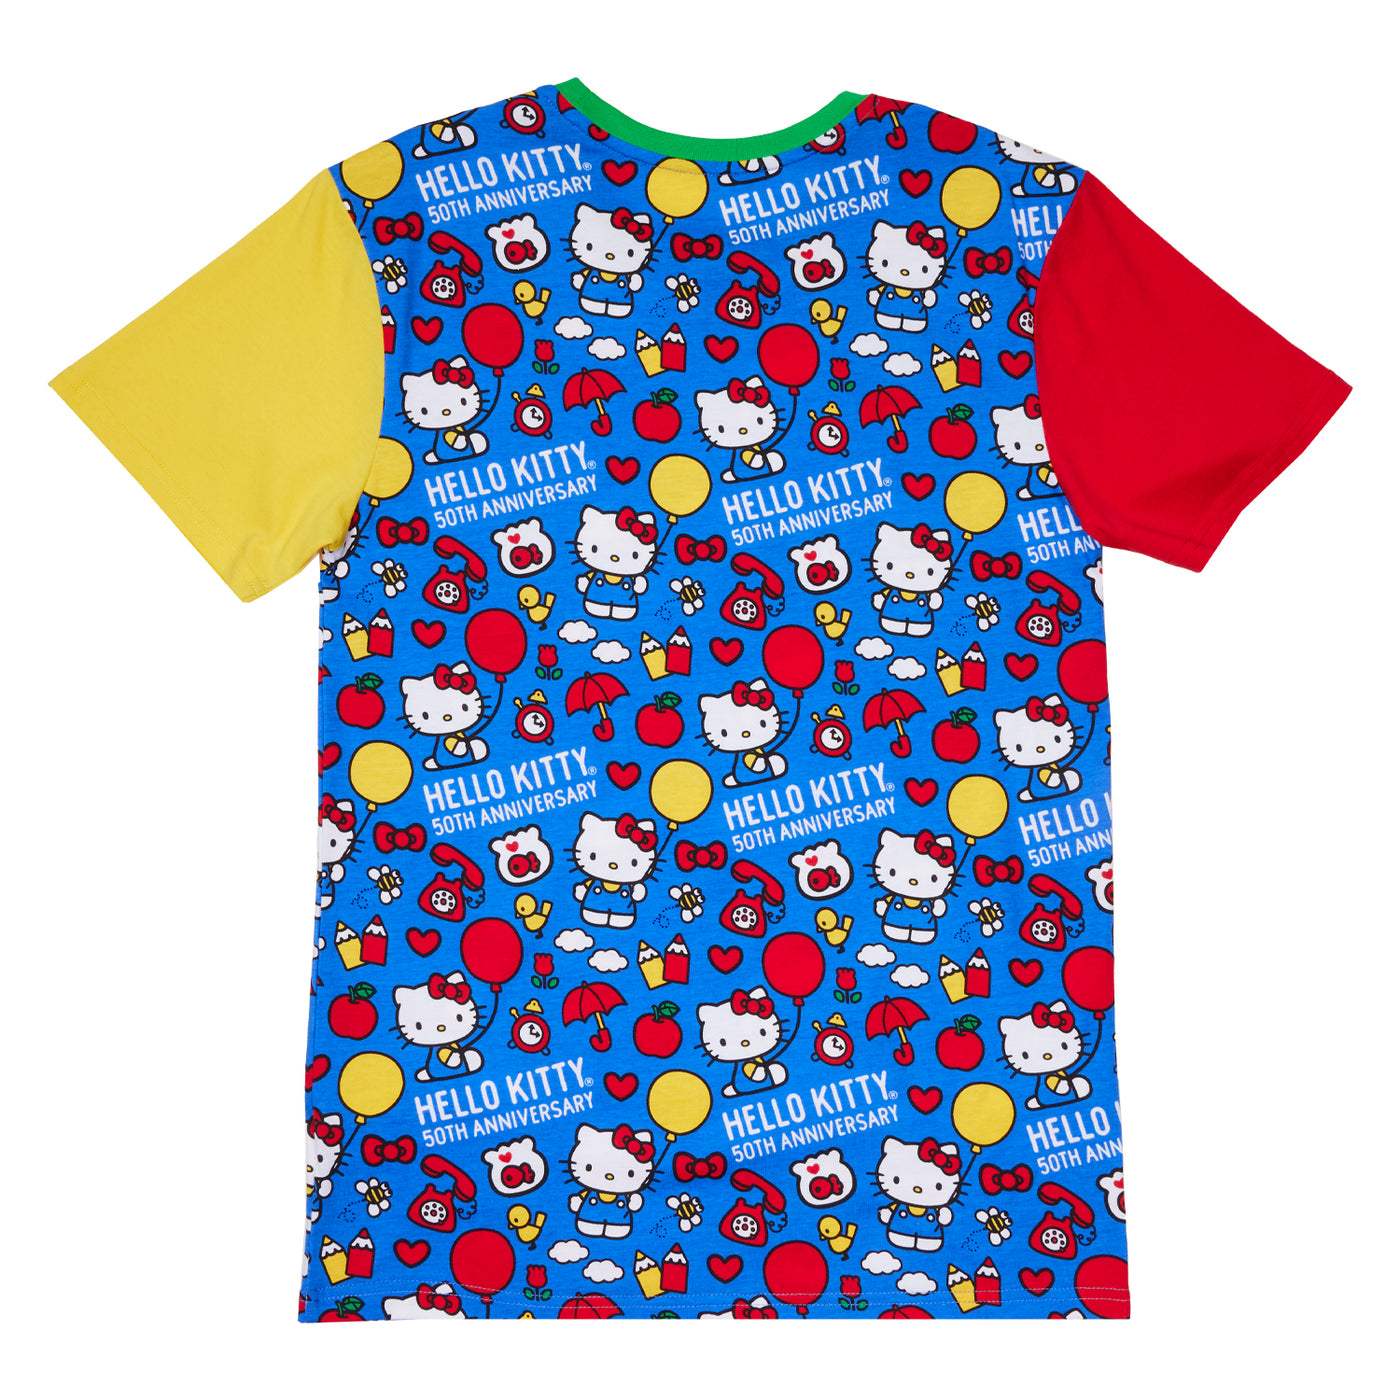 Sanrio Hello Kitty 50th Anniversary T-Shirt